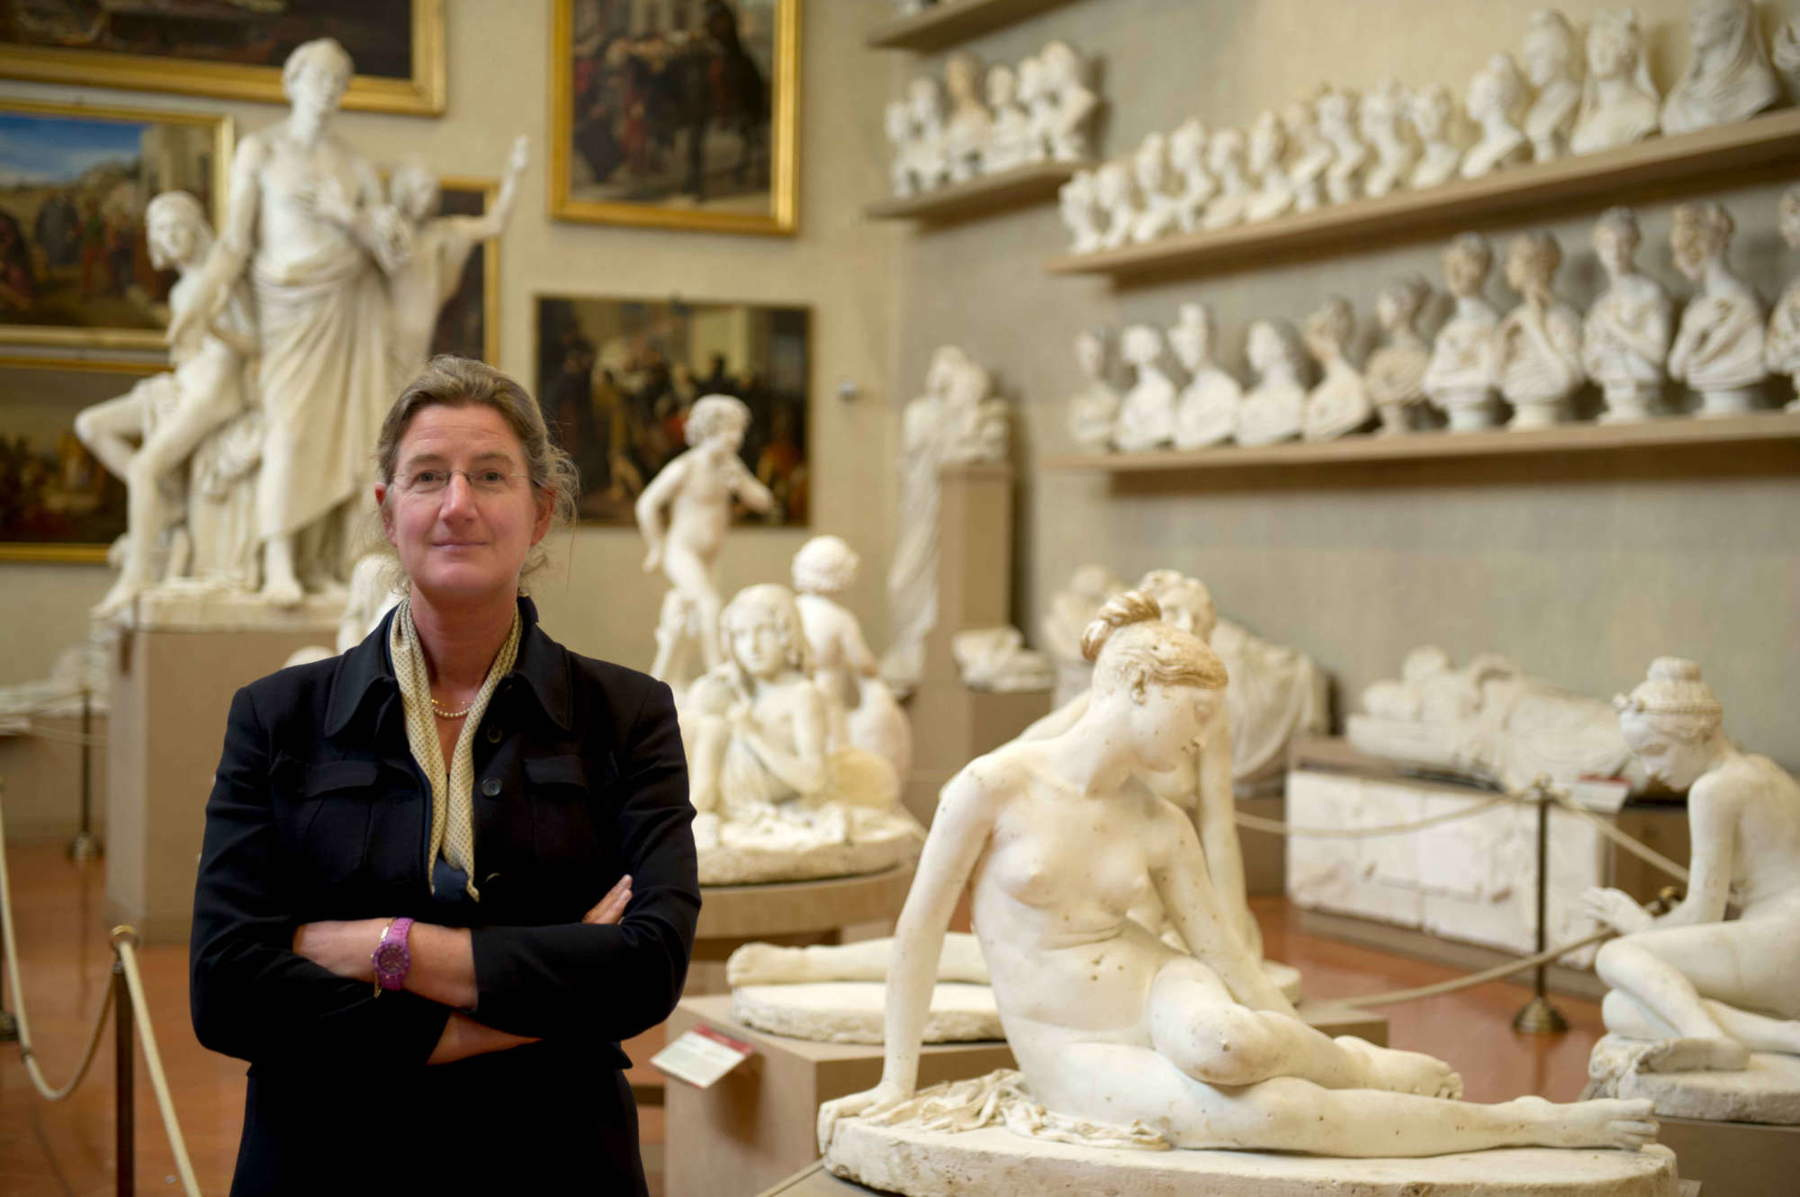 Bufera su Cecilie Hollberg: “Firenze è diventata una meretrice”. Poi le scuse